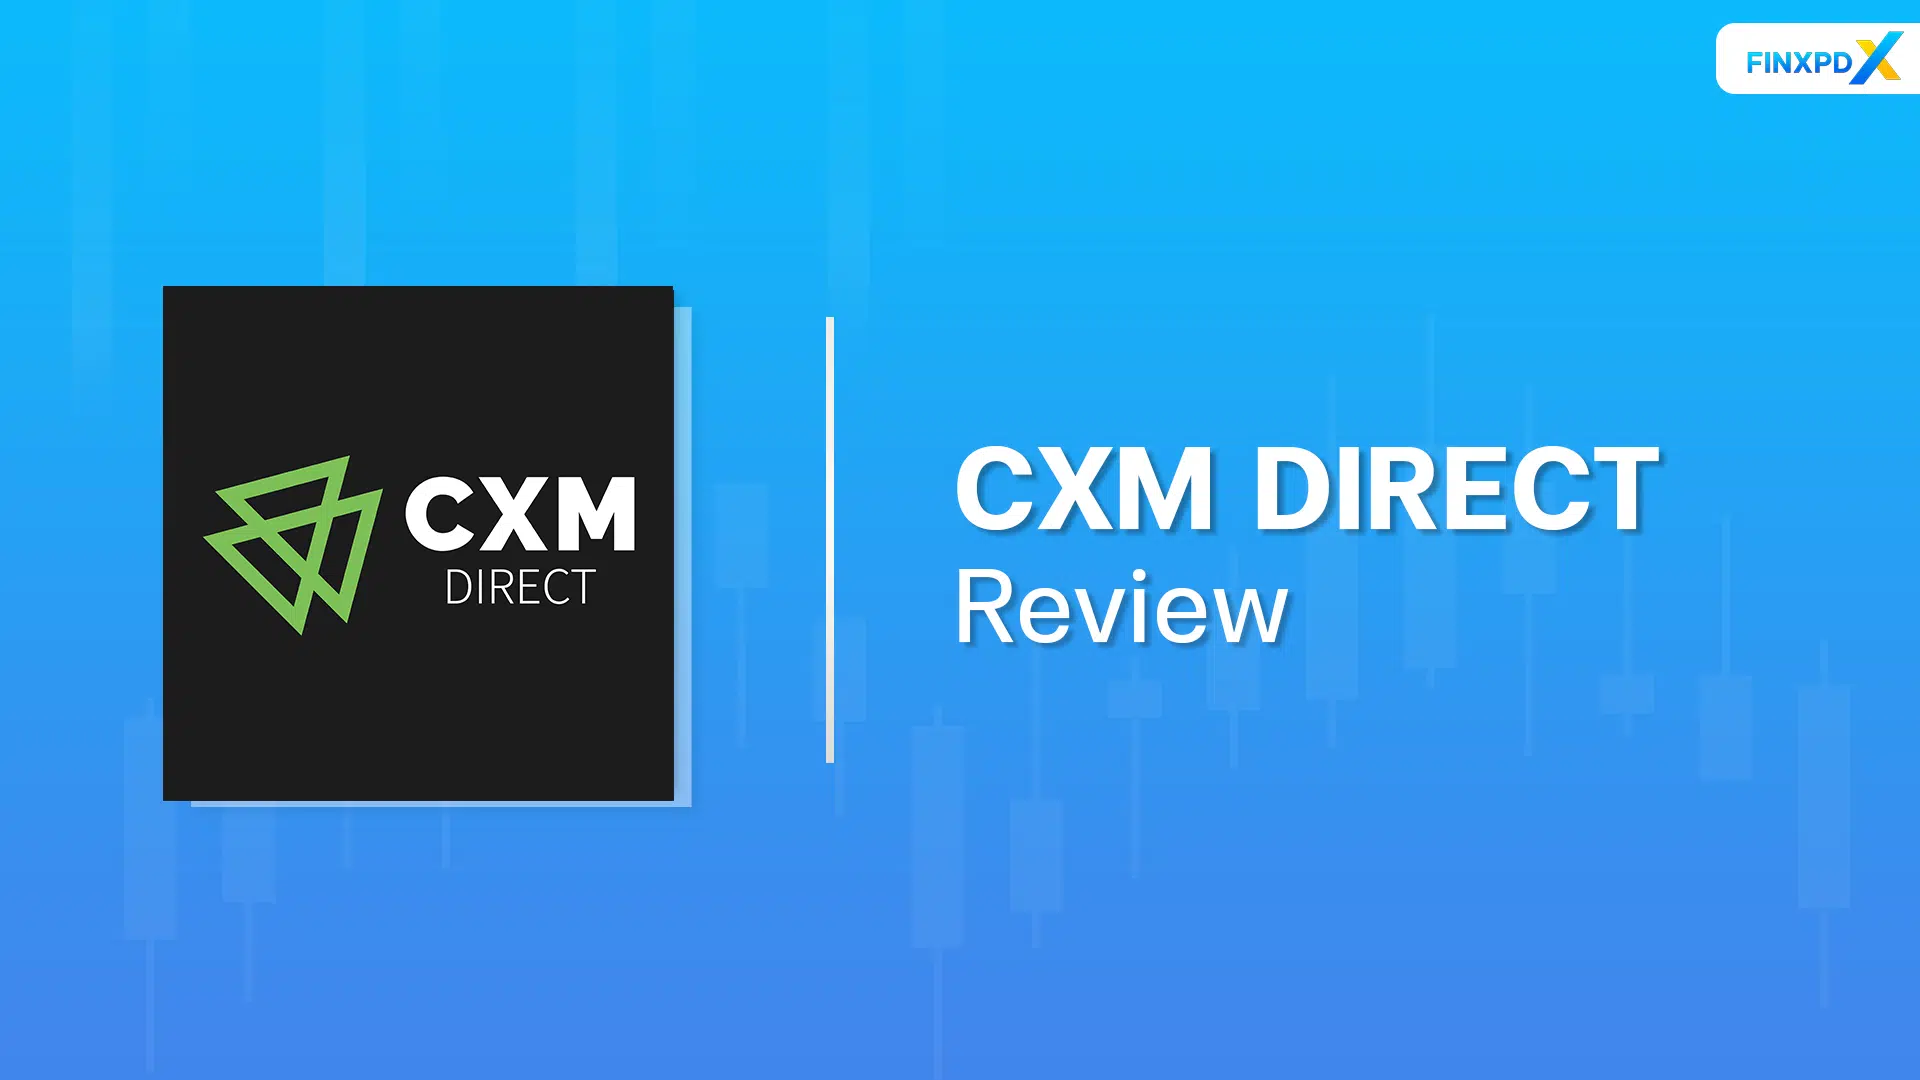 CXM Direct レビューサービス、機能、ユーザーフィードバック